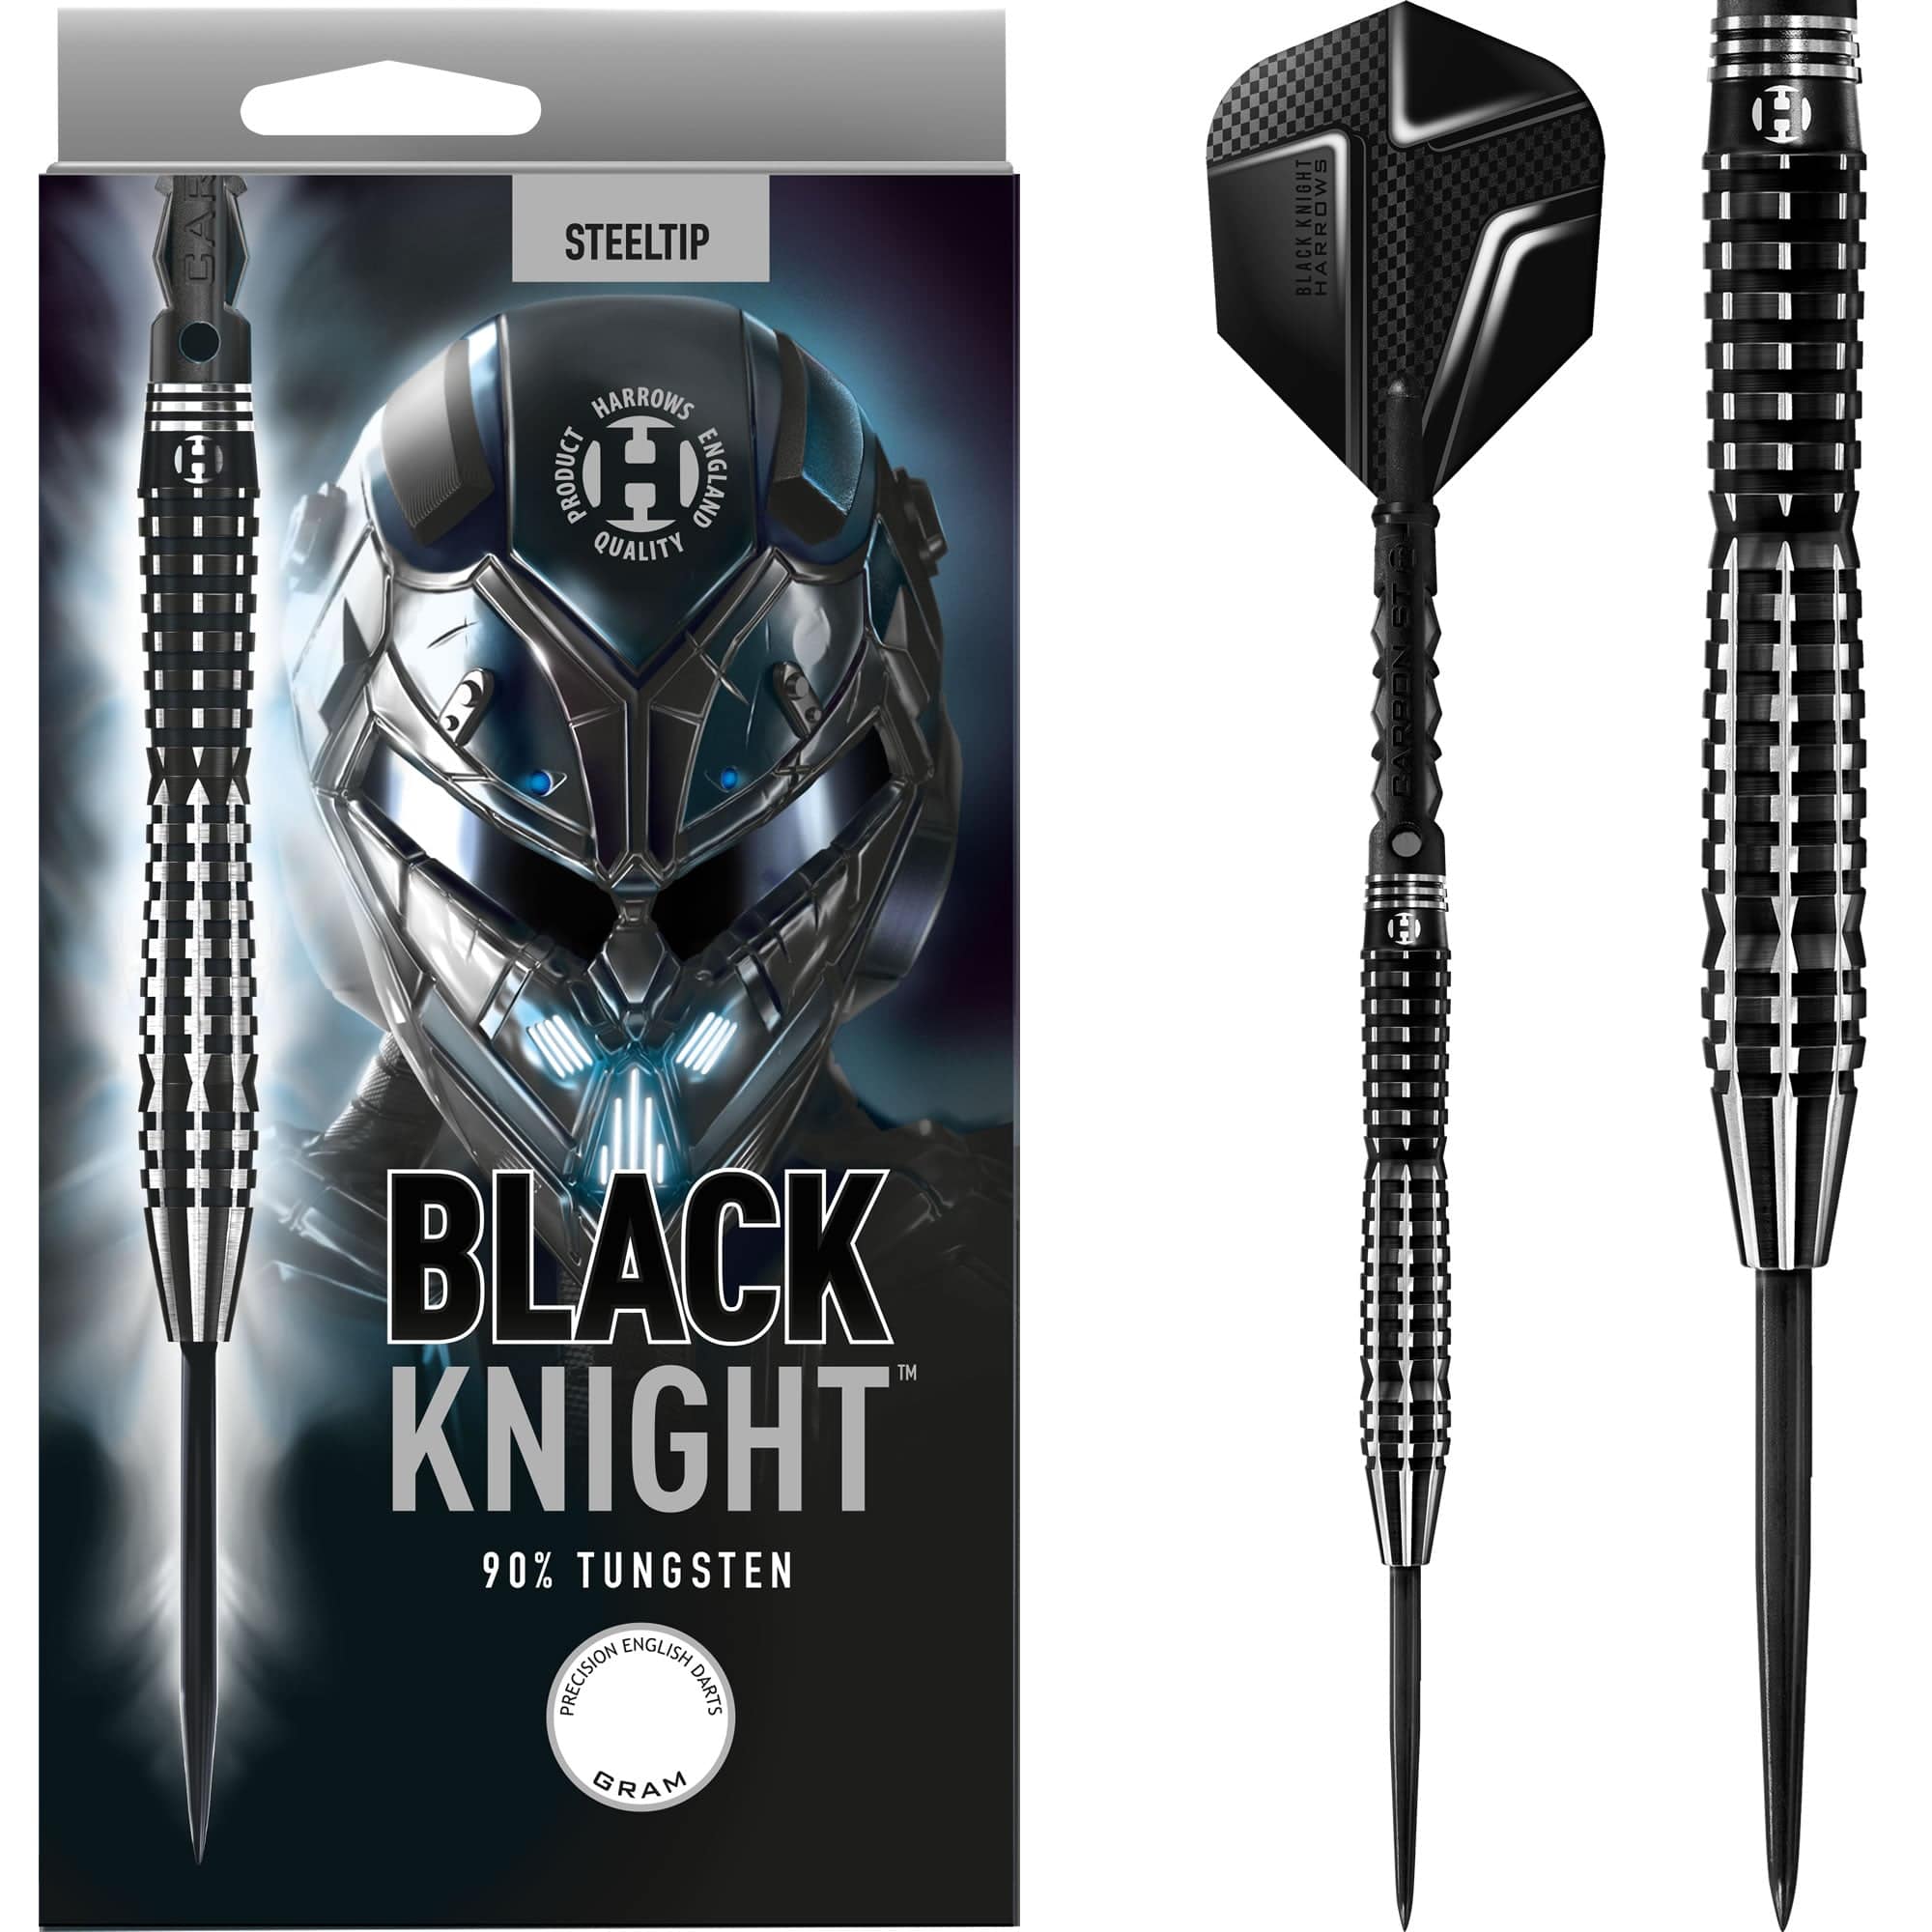 Harrows Black Knight Darts - Steel Tip - Black & Silver